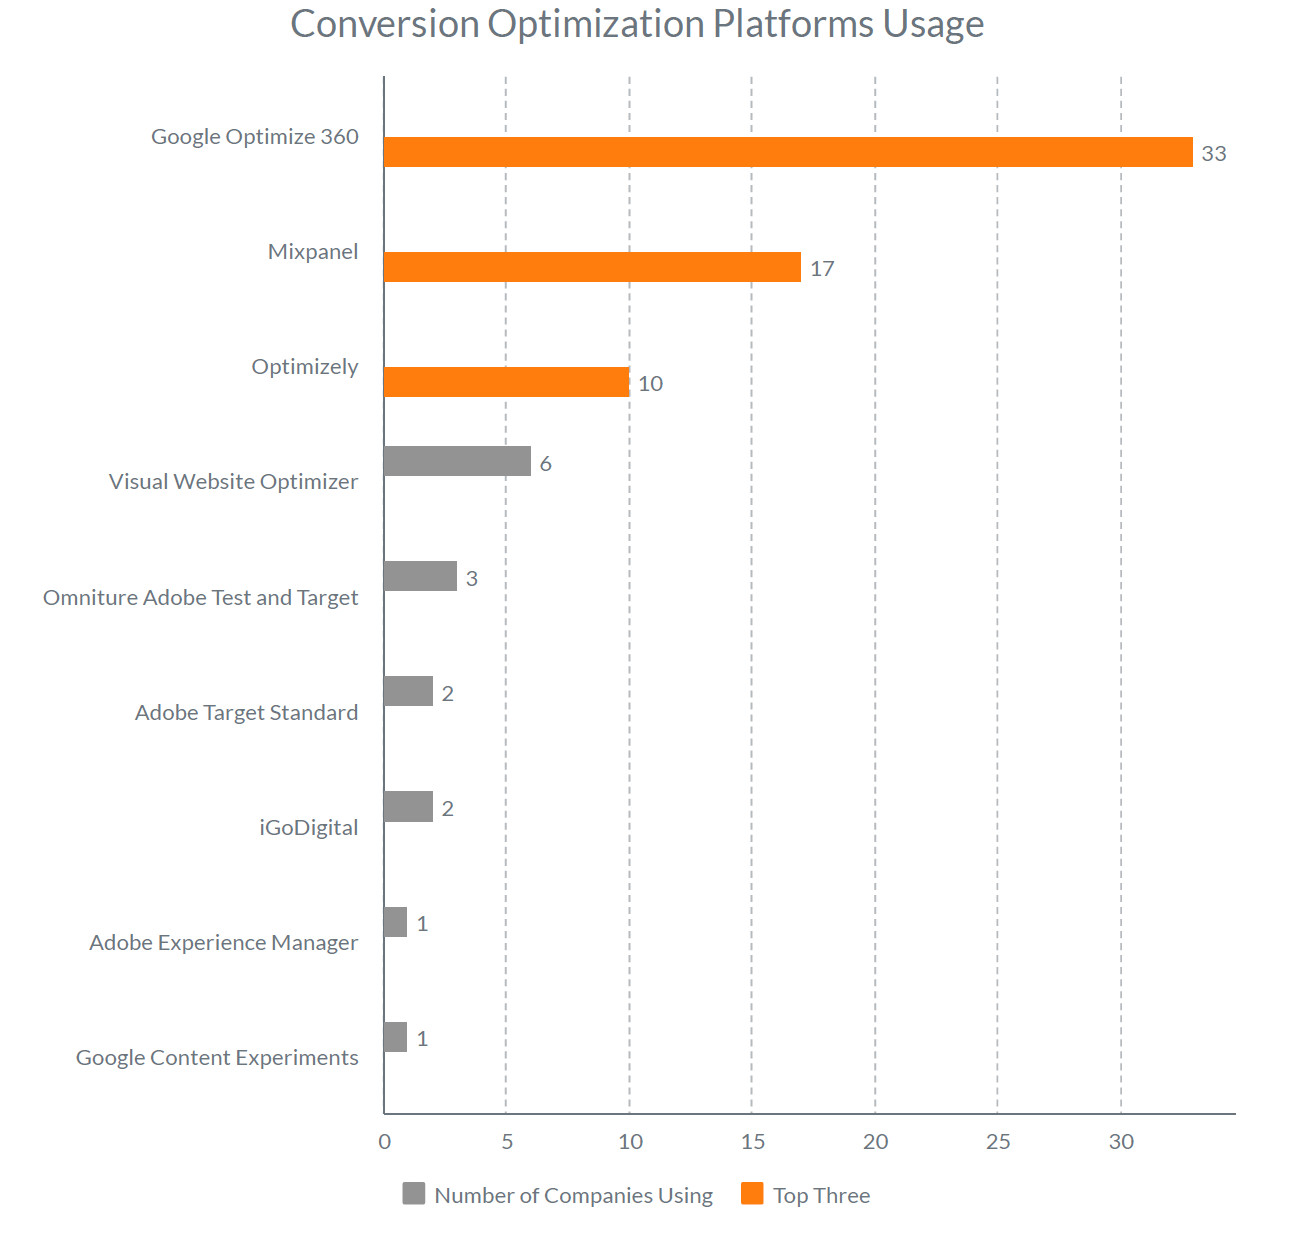 buildops marketing trends conversion optimization usage